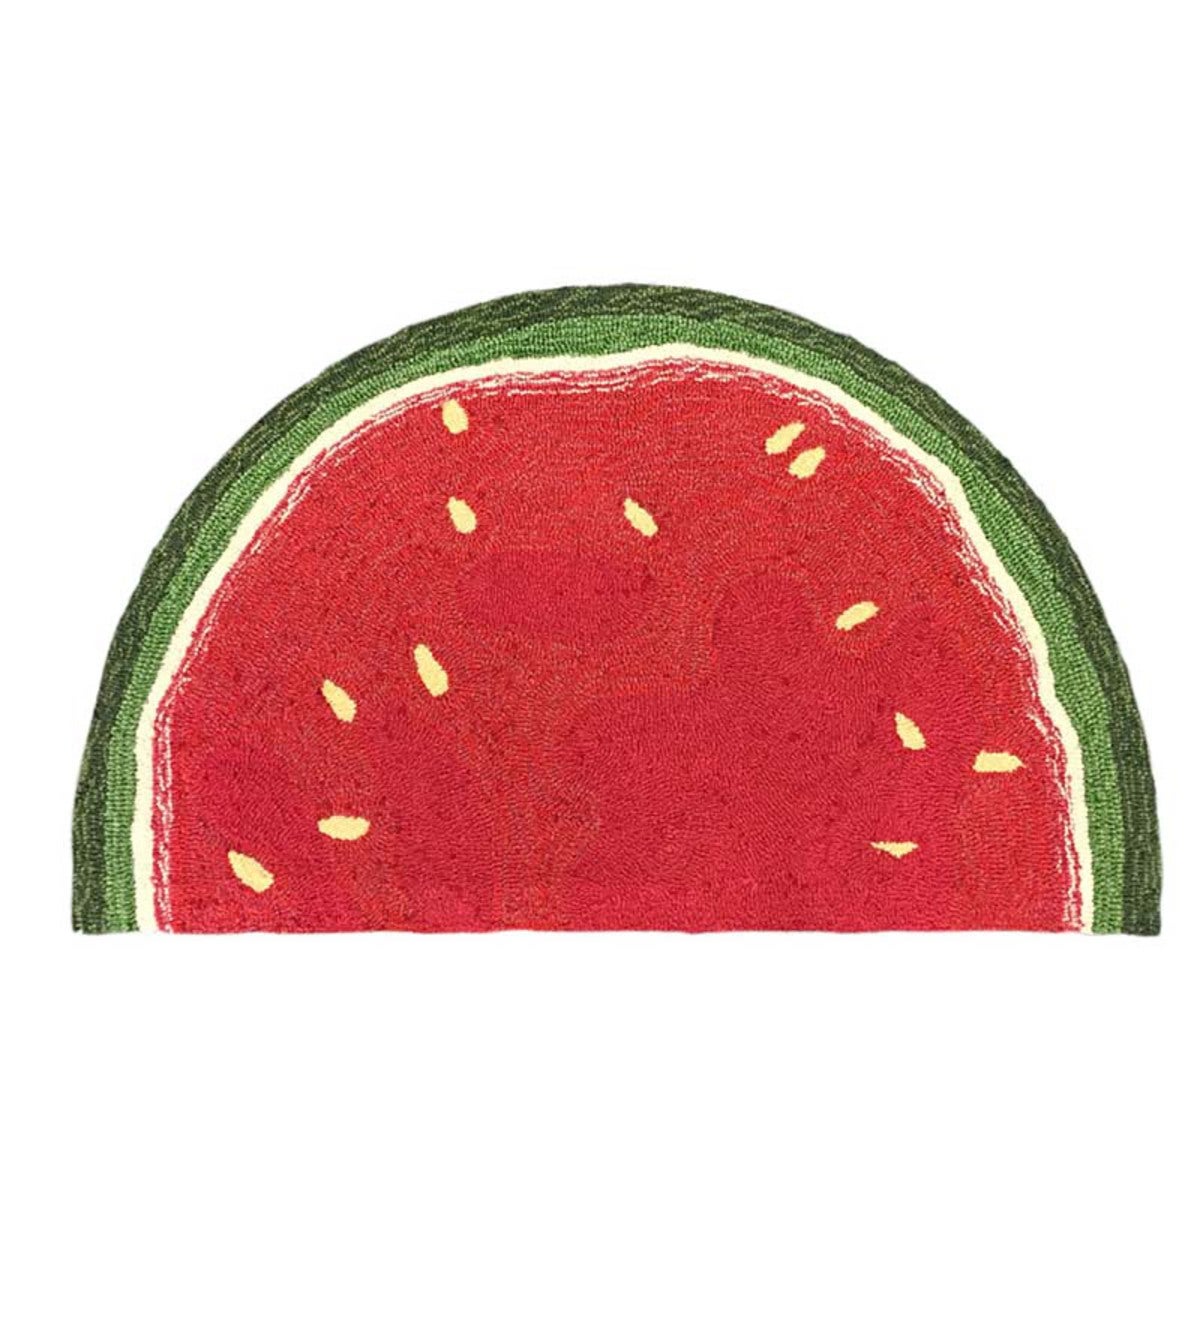 Fruit Slice Indoor/Outdoor Half-Round Rug, 20"W x 30"L - Watermelon Slice Red